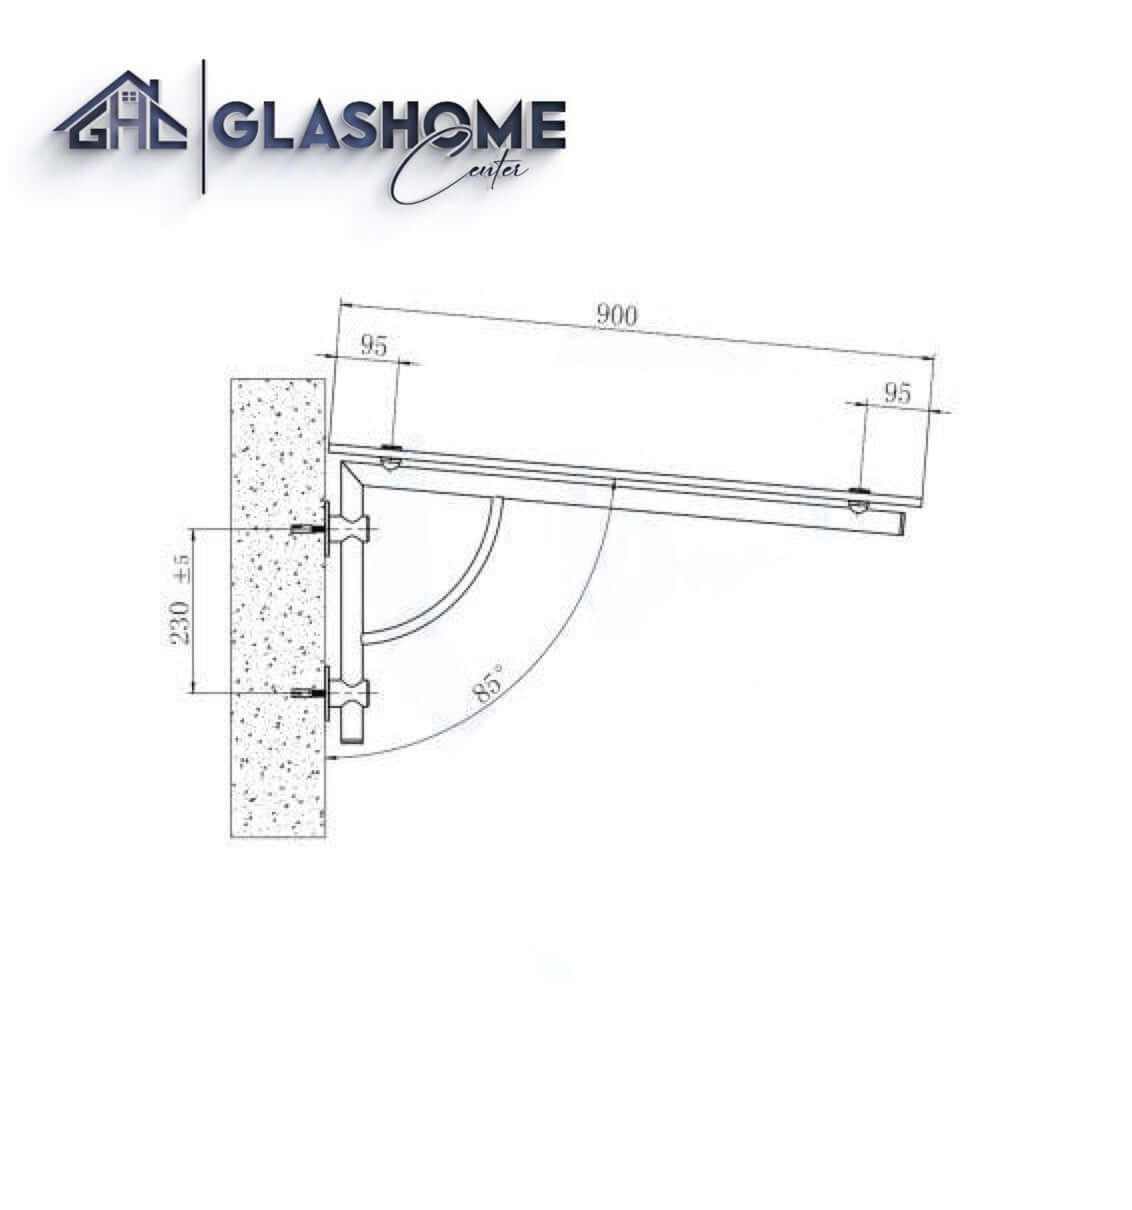 GlasHomeCenter - glass canopy - Clear glass - 130x90cm - 13.1mm VSG - incl. 2 Edelstahlhalterungen Variant "Athens"